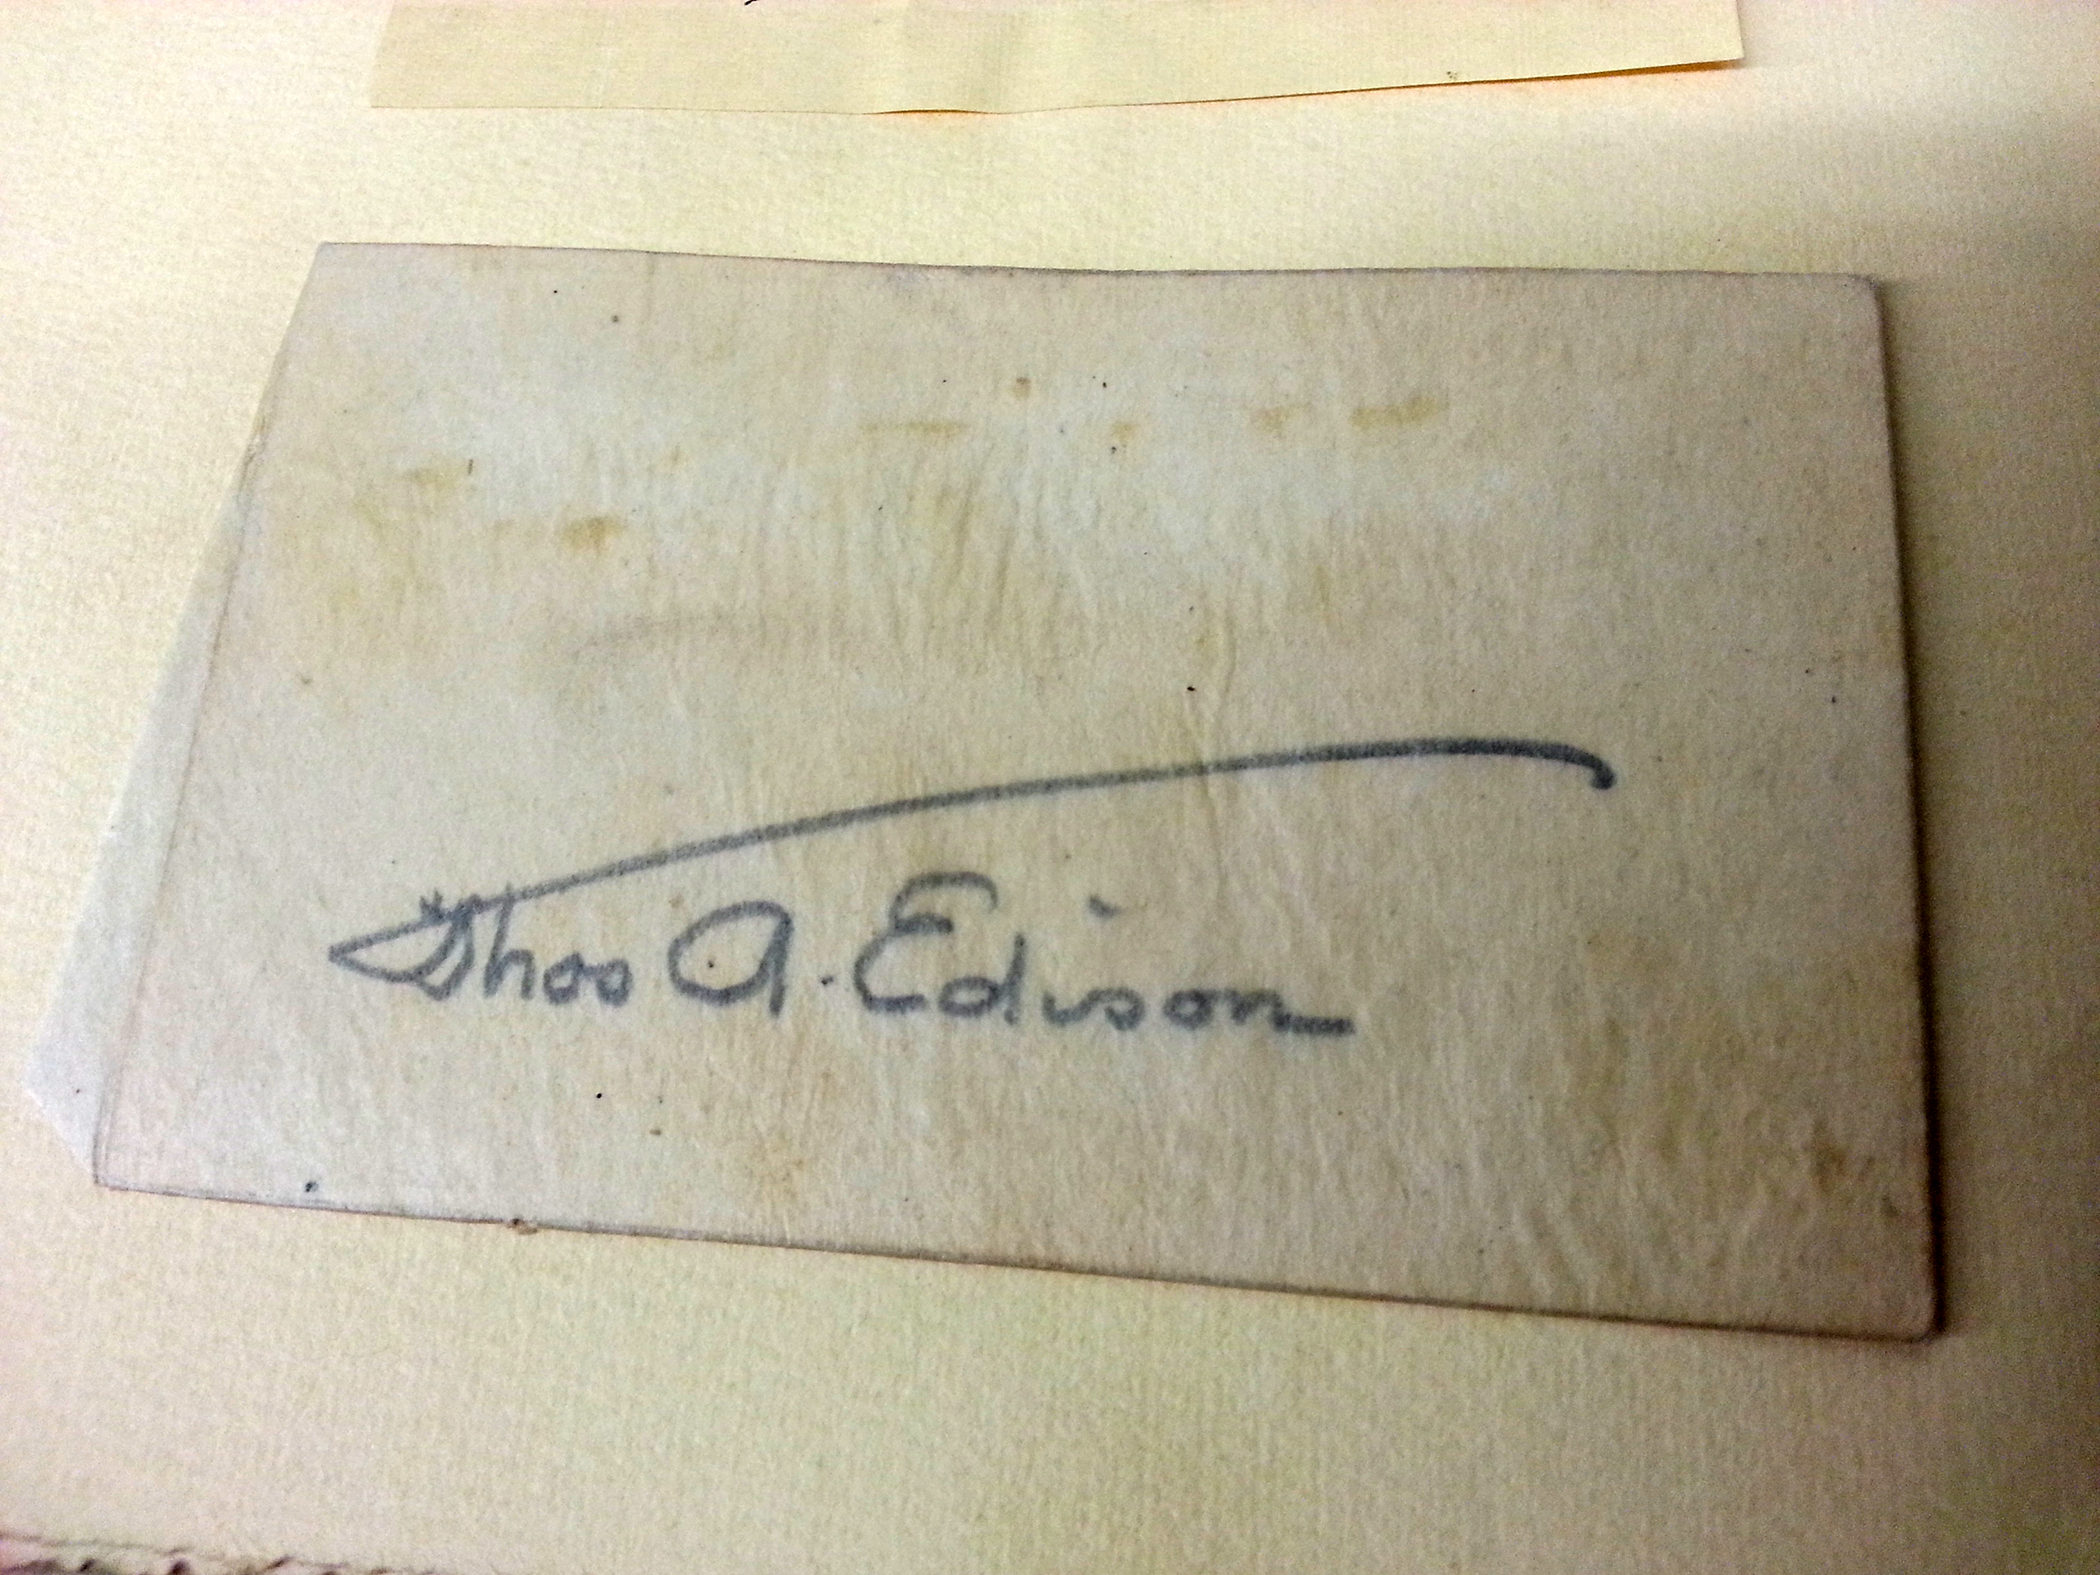 Thomas Edison signature